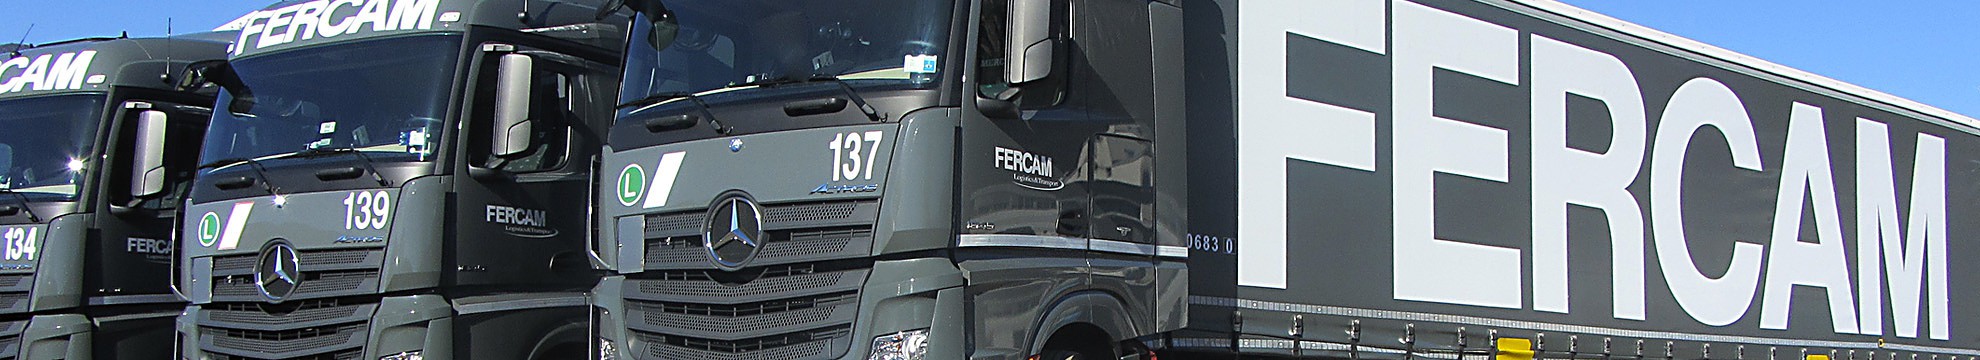 Fercam Austria GmbH